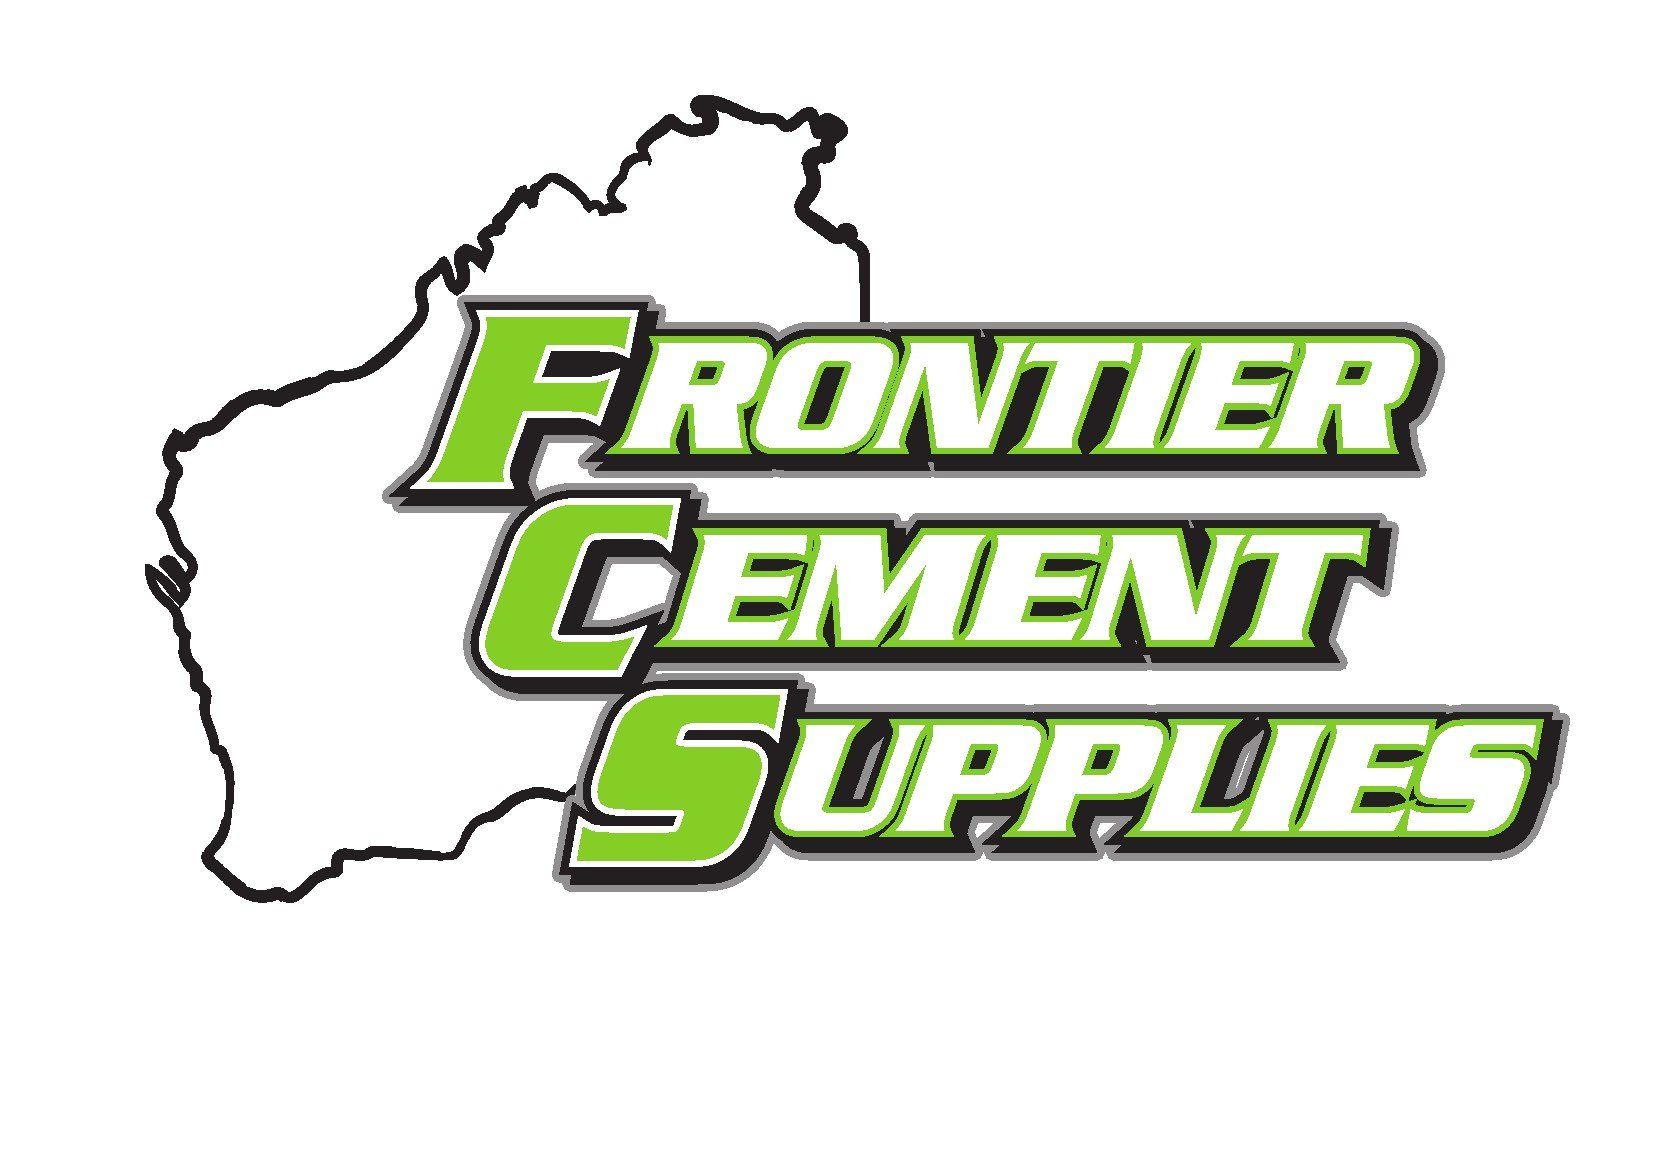 Frontier Cement Supplies